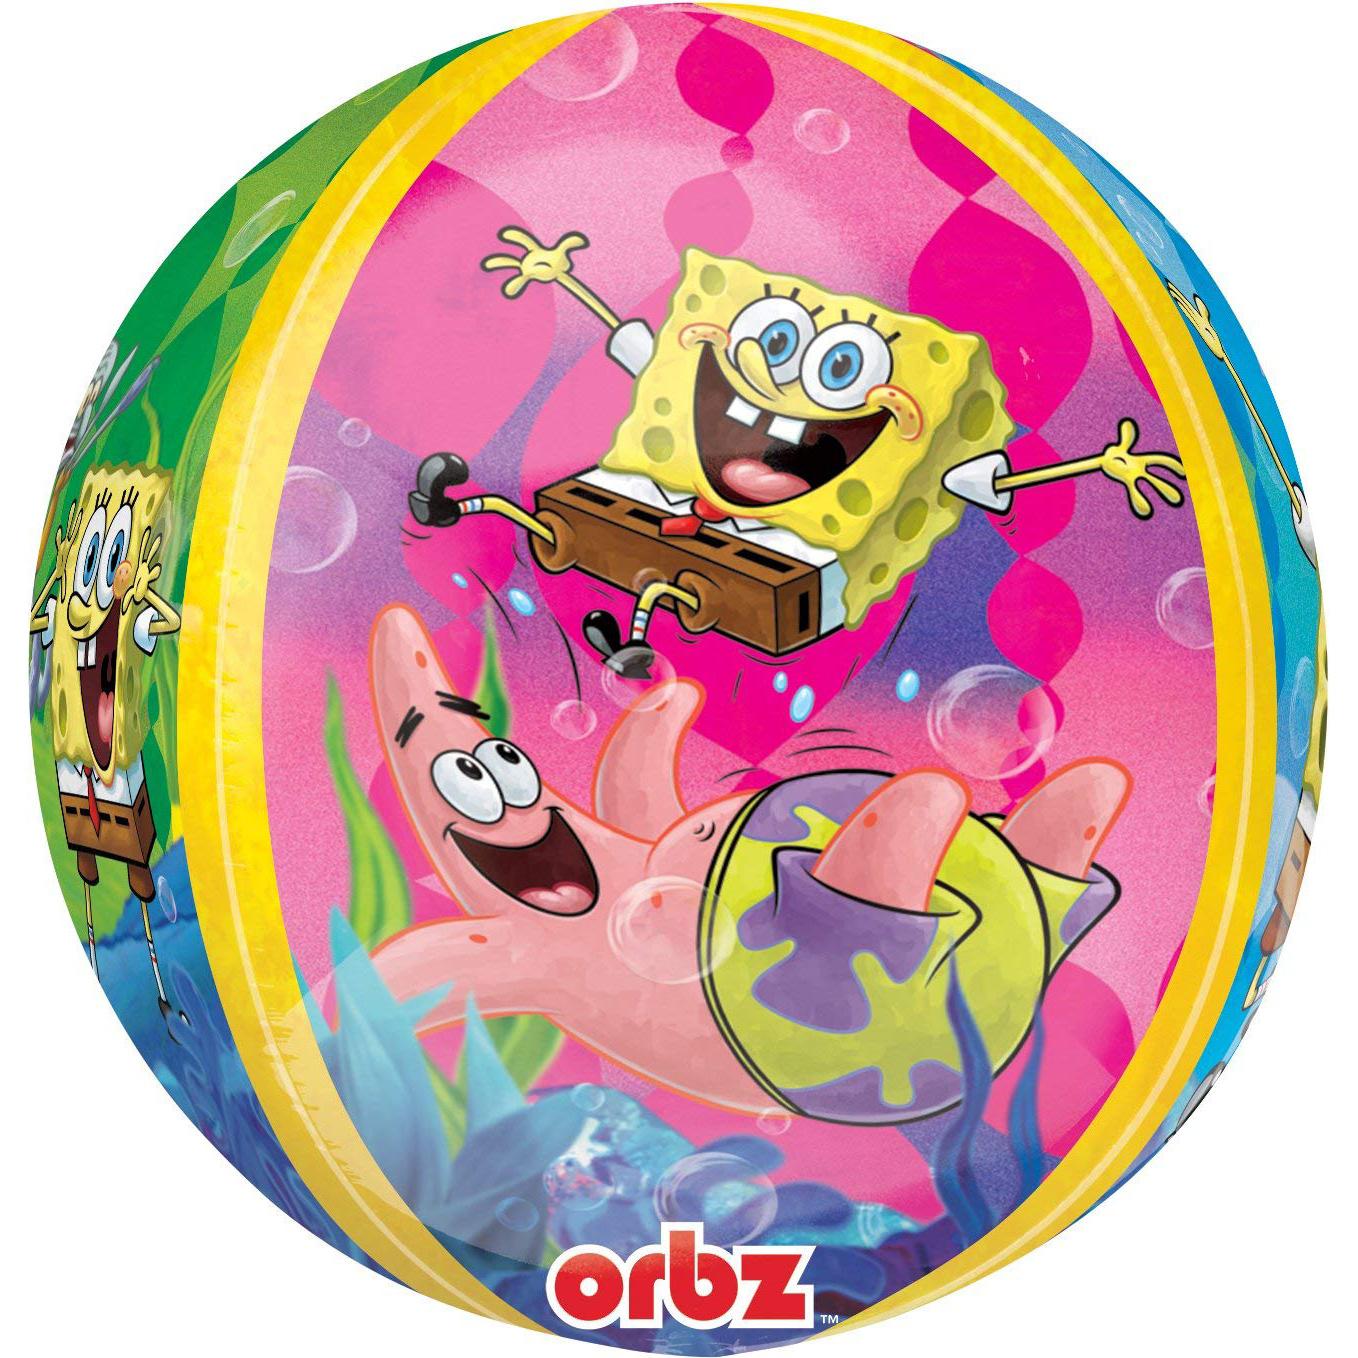 SpongeBob SquarePants Orbz Balloon 38x40cm Balloons & Streamers - Party Centre - Party Centre